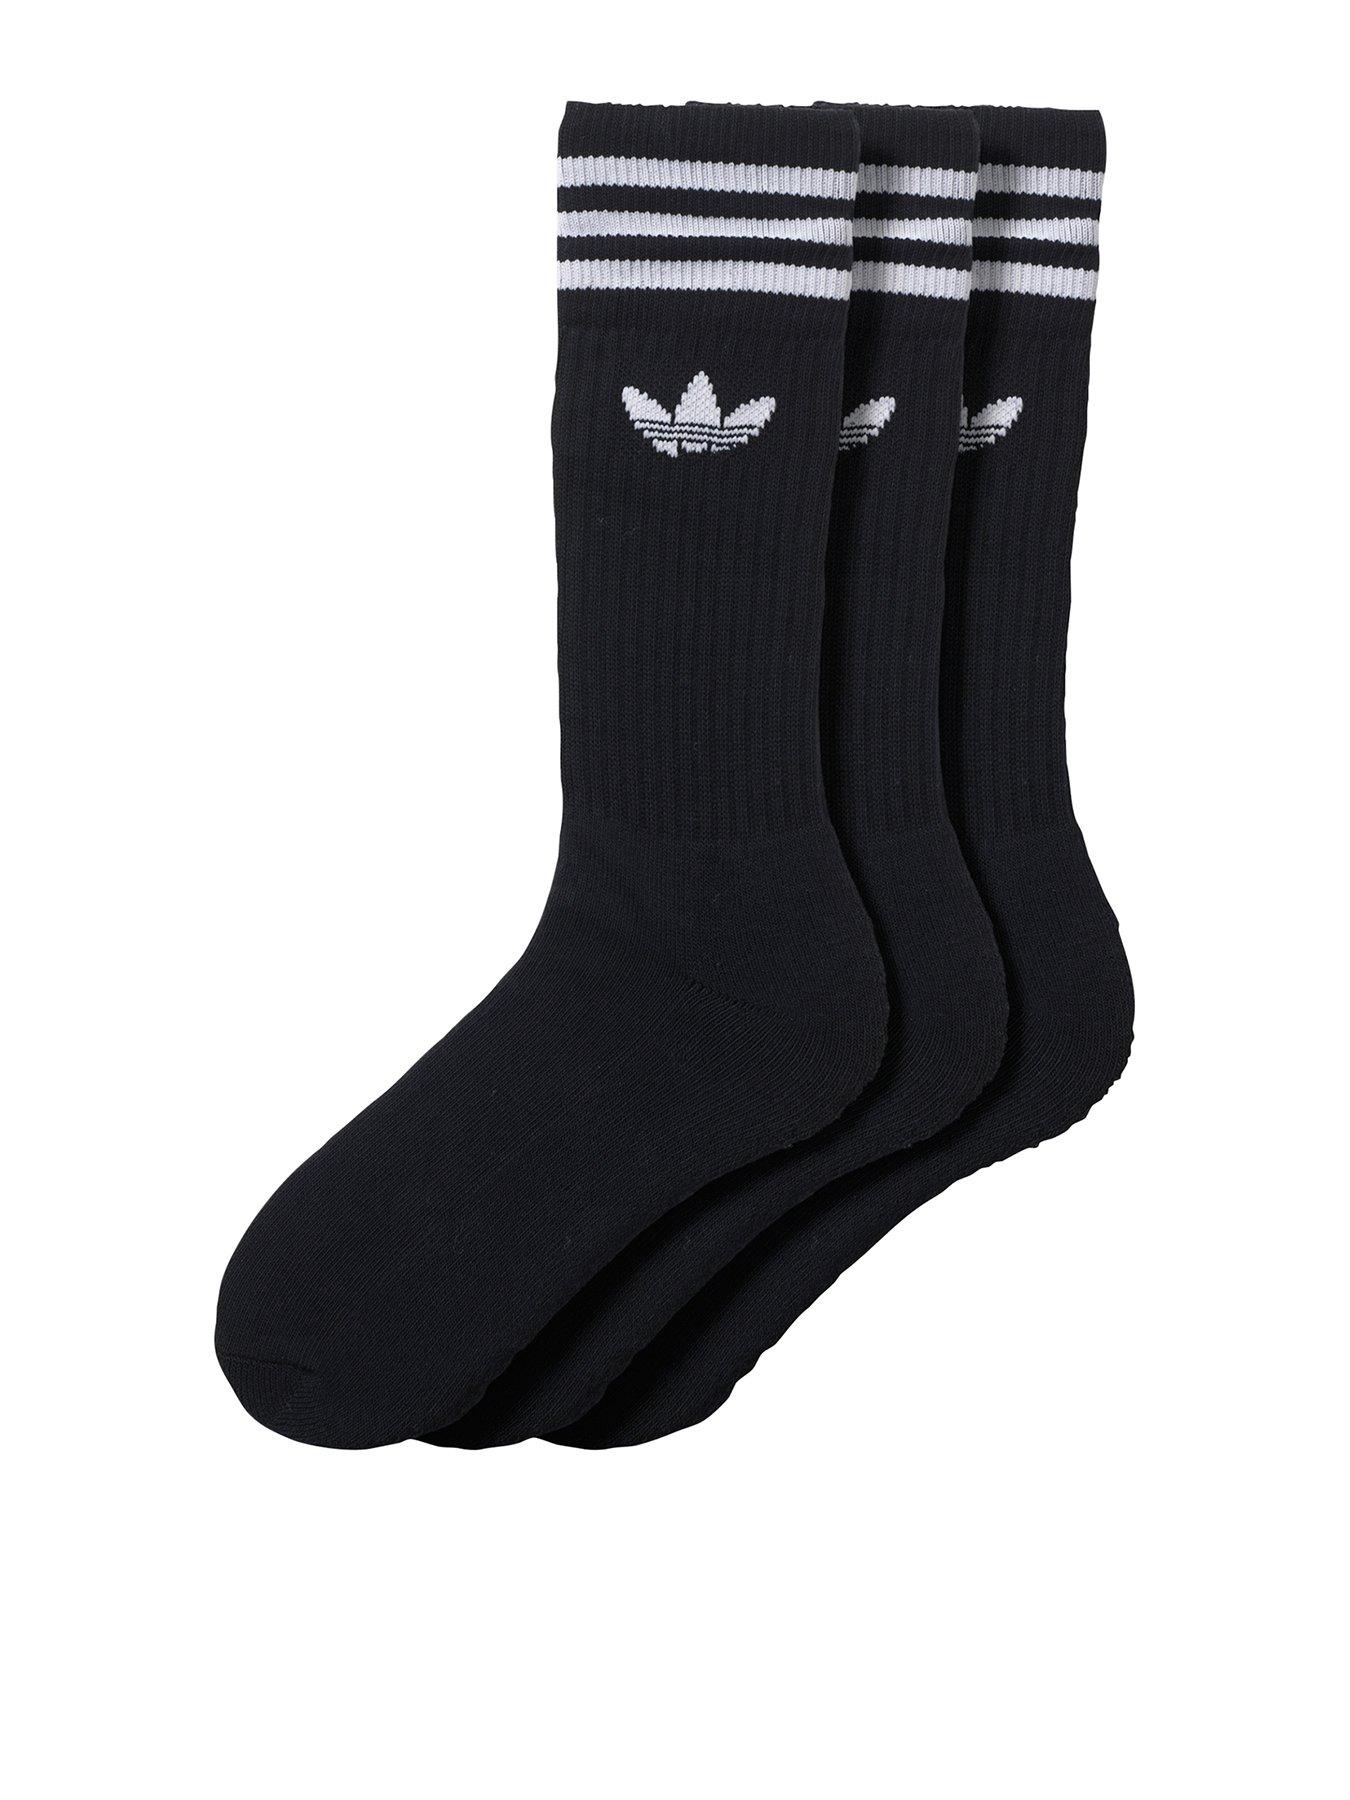 adidas originals black socks